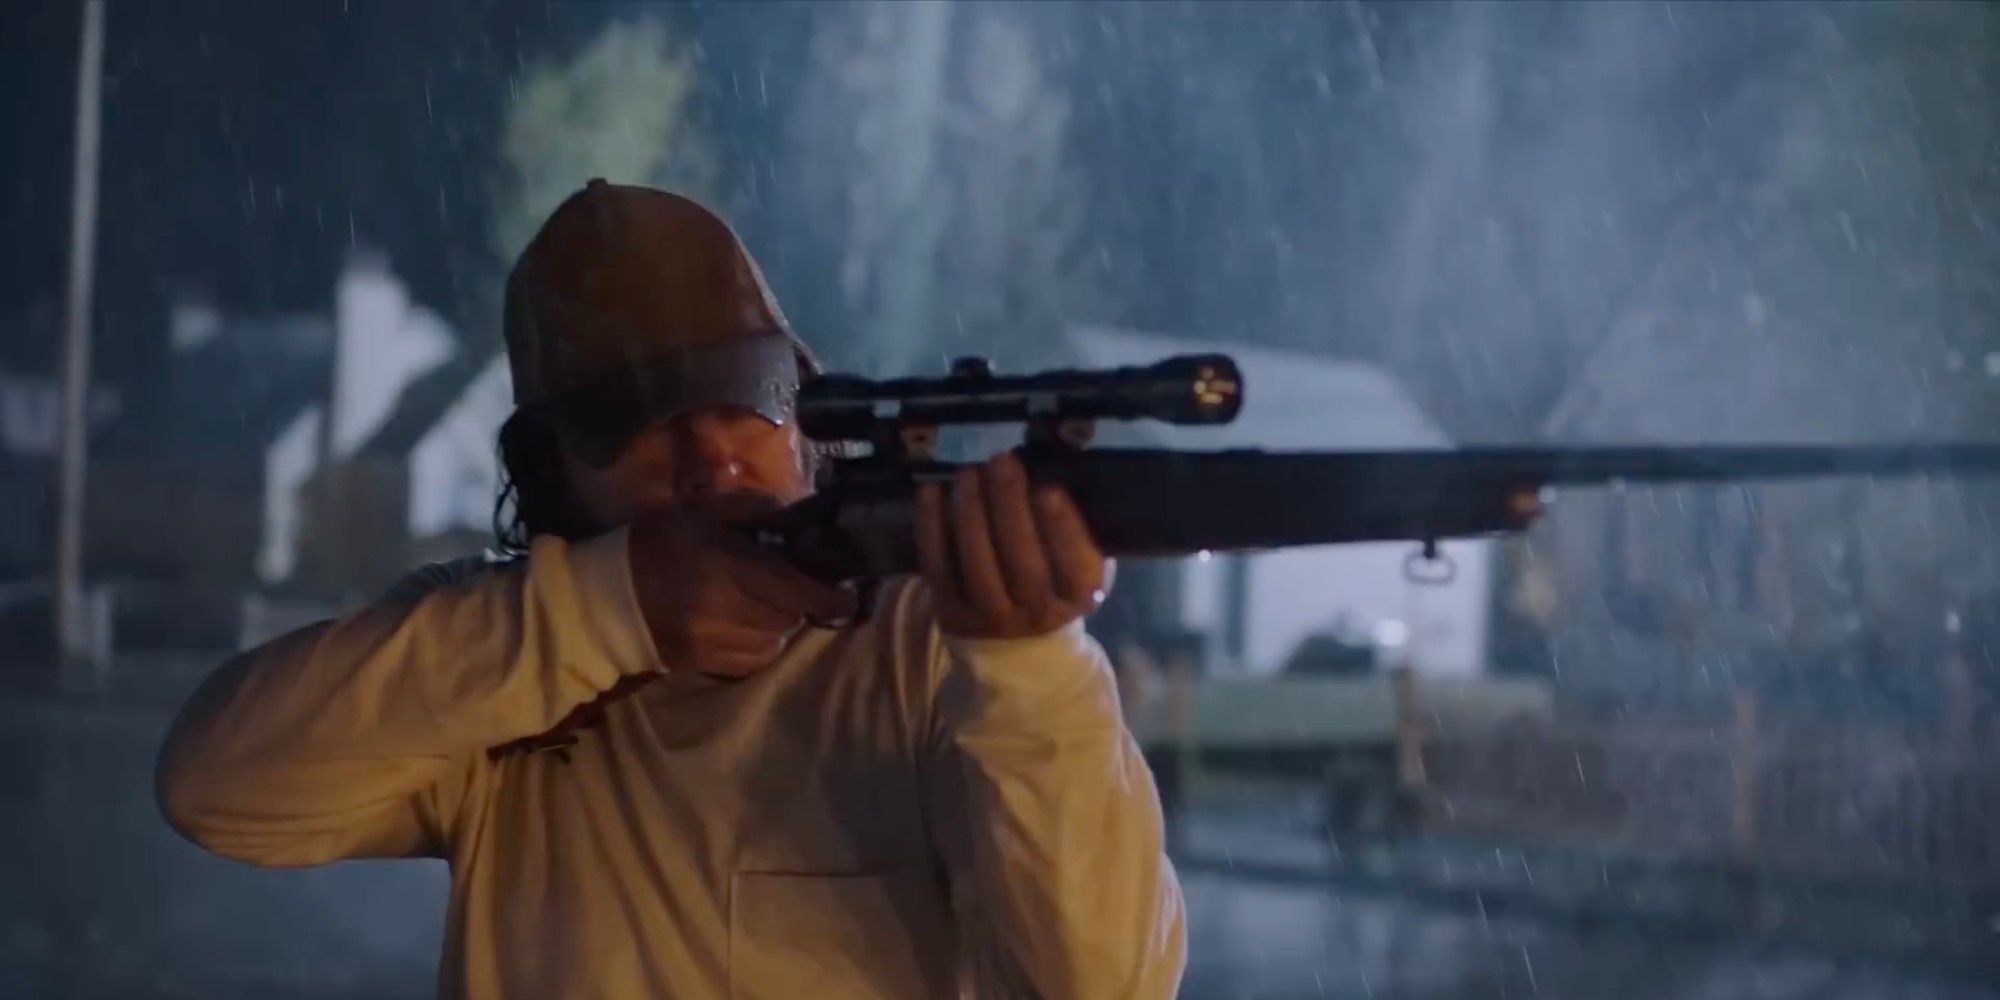 Bill firing a gun in episode 3 of The Last of Us